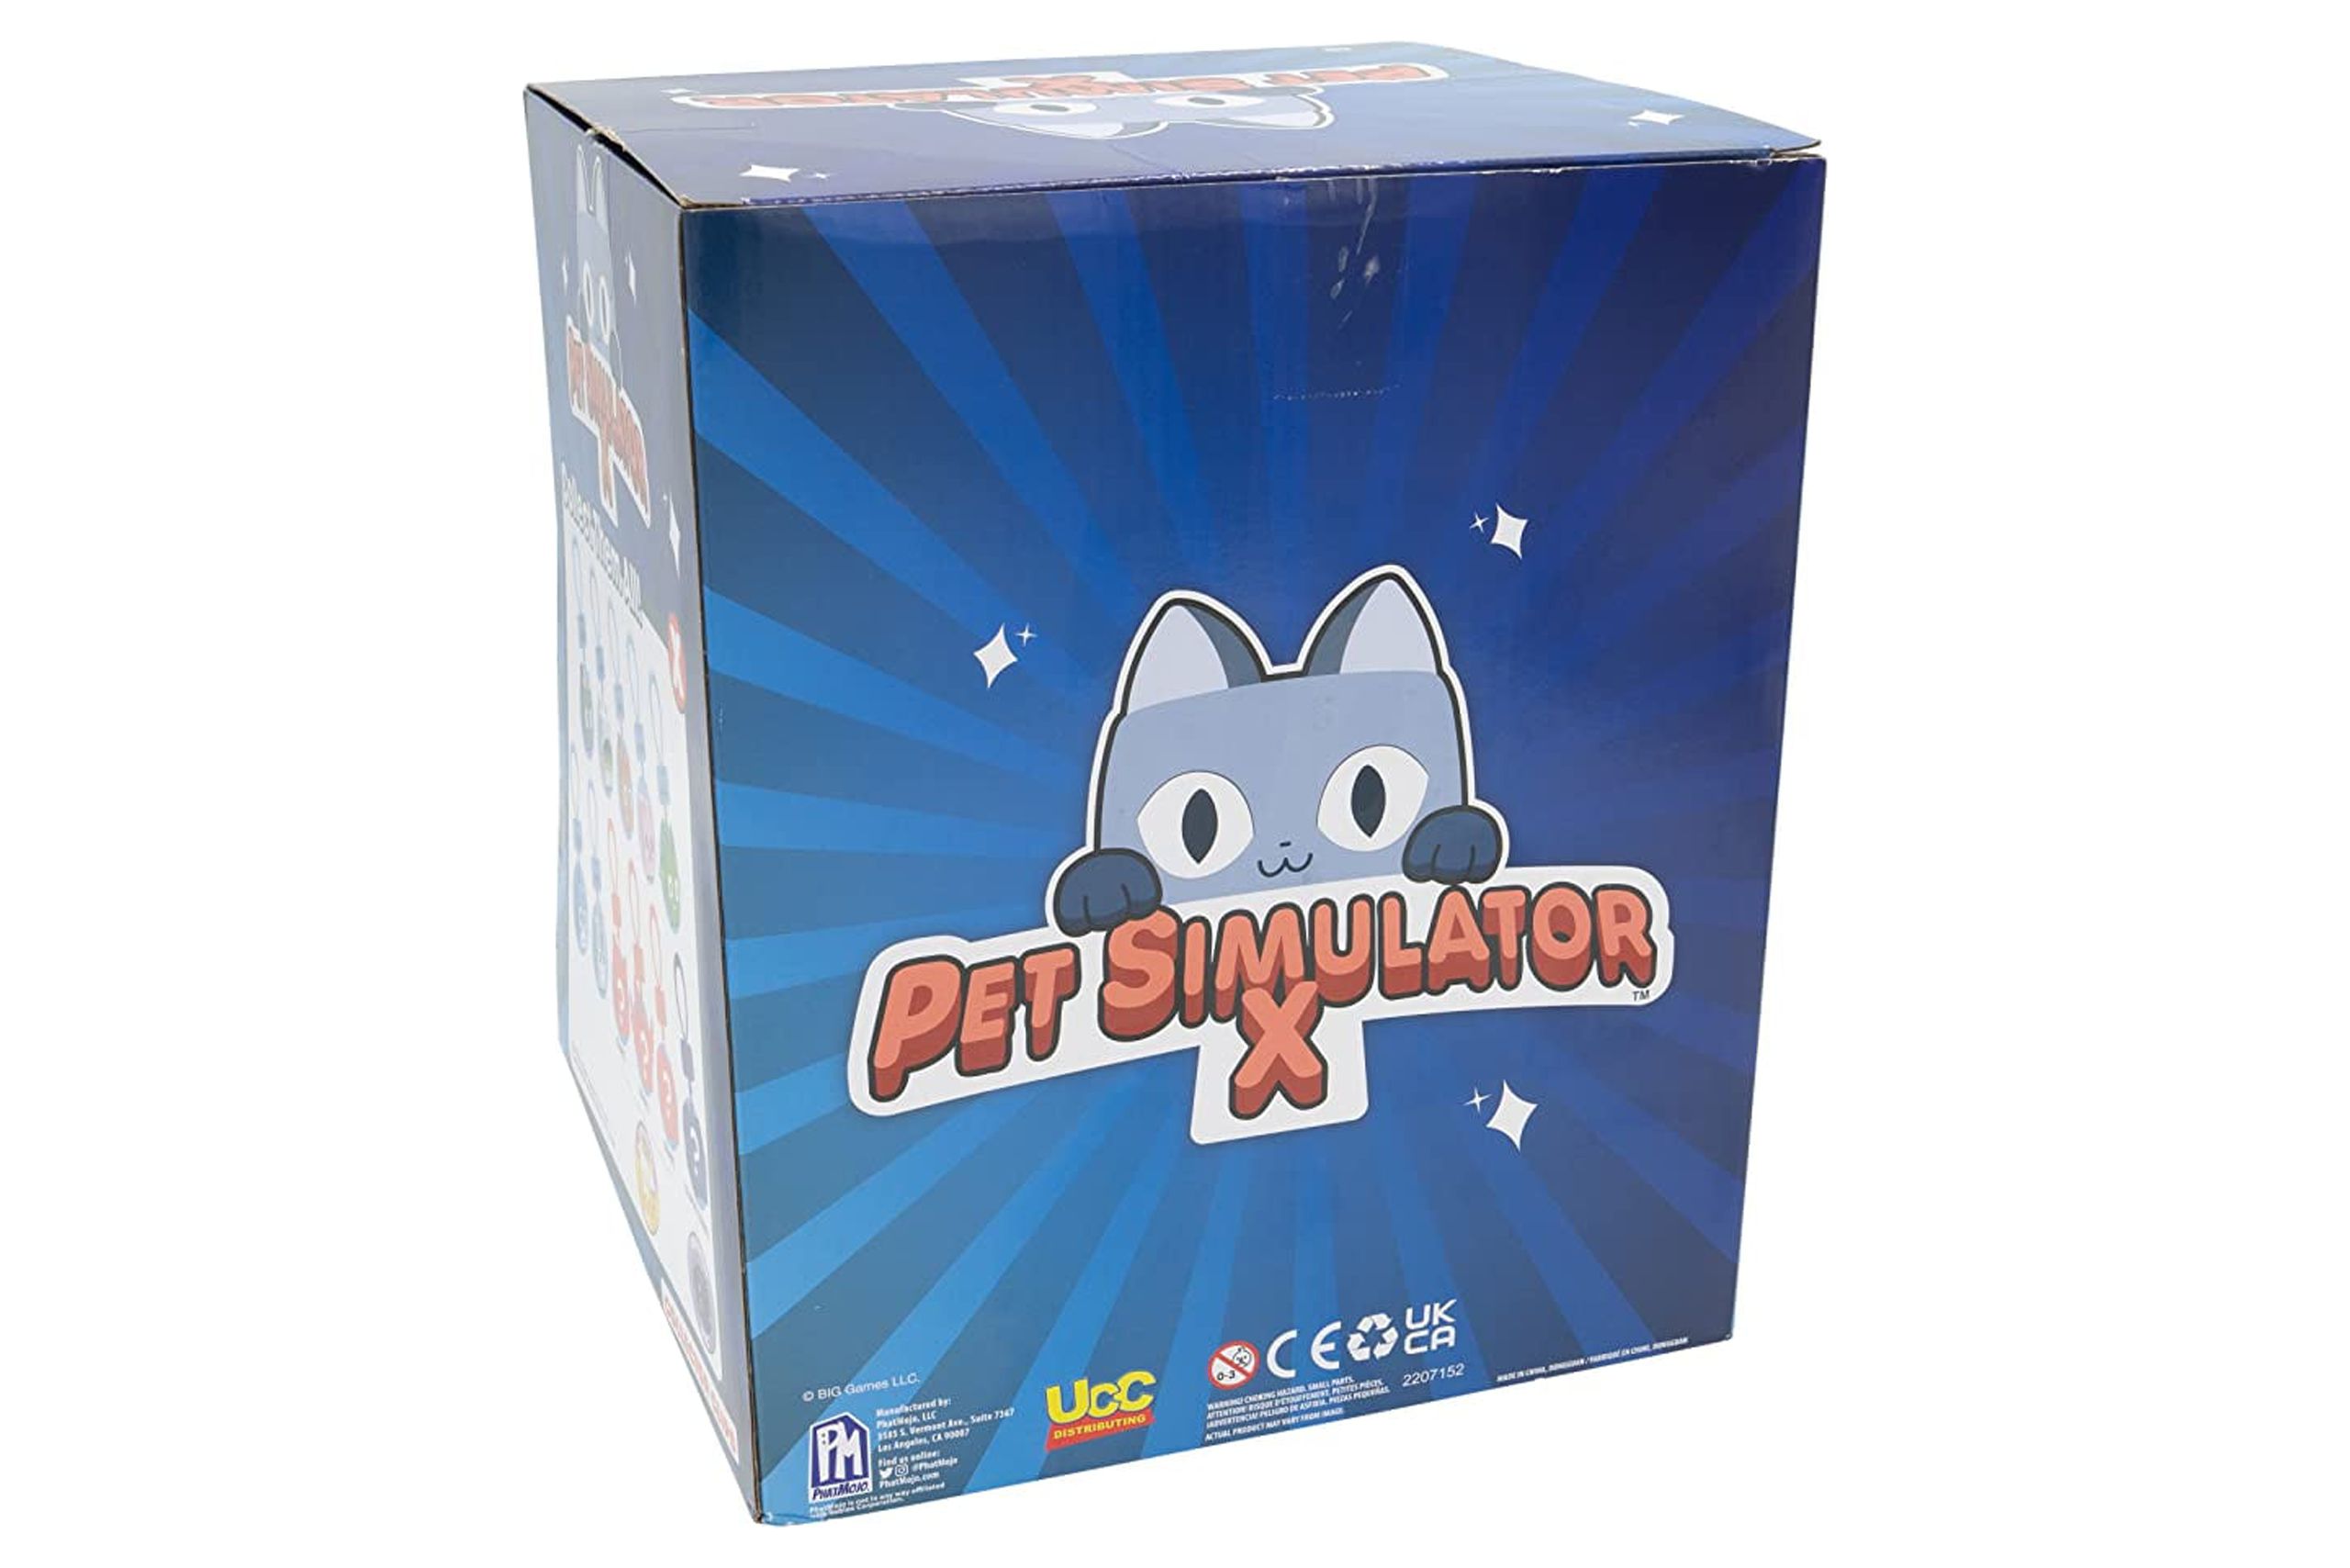 Pet Simulator X Merchandise